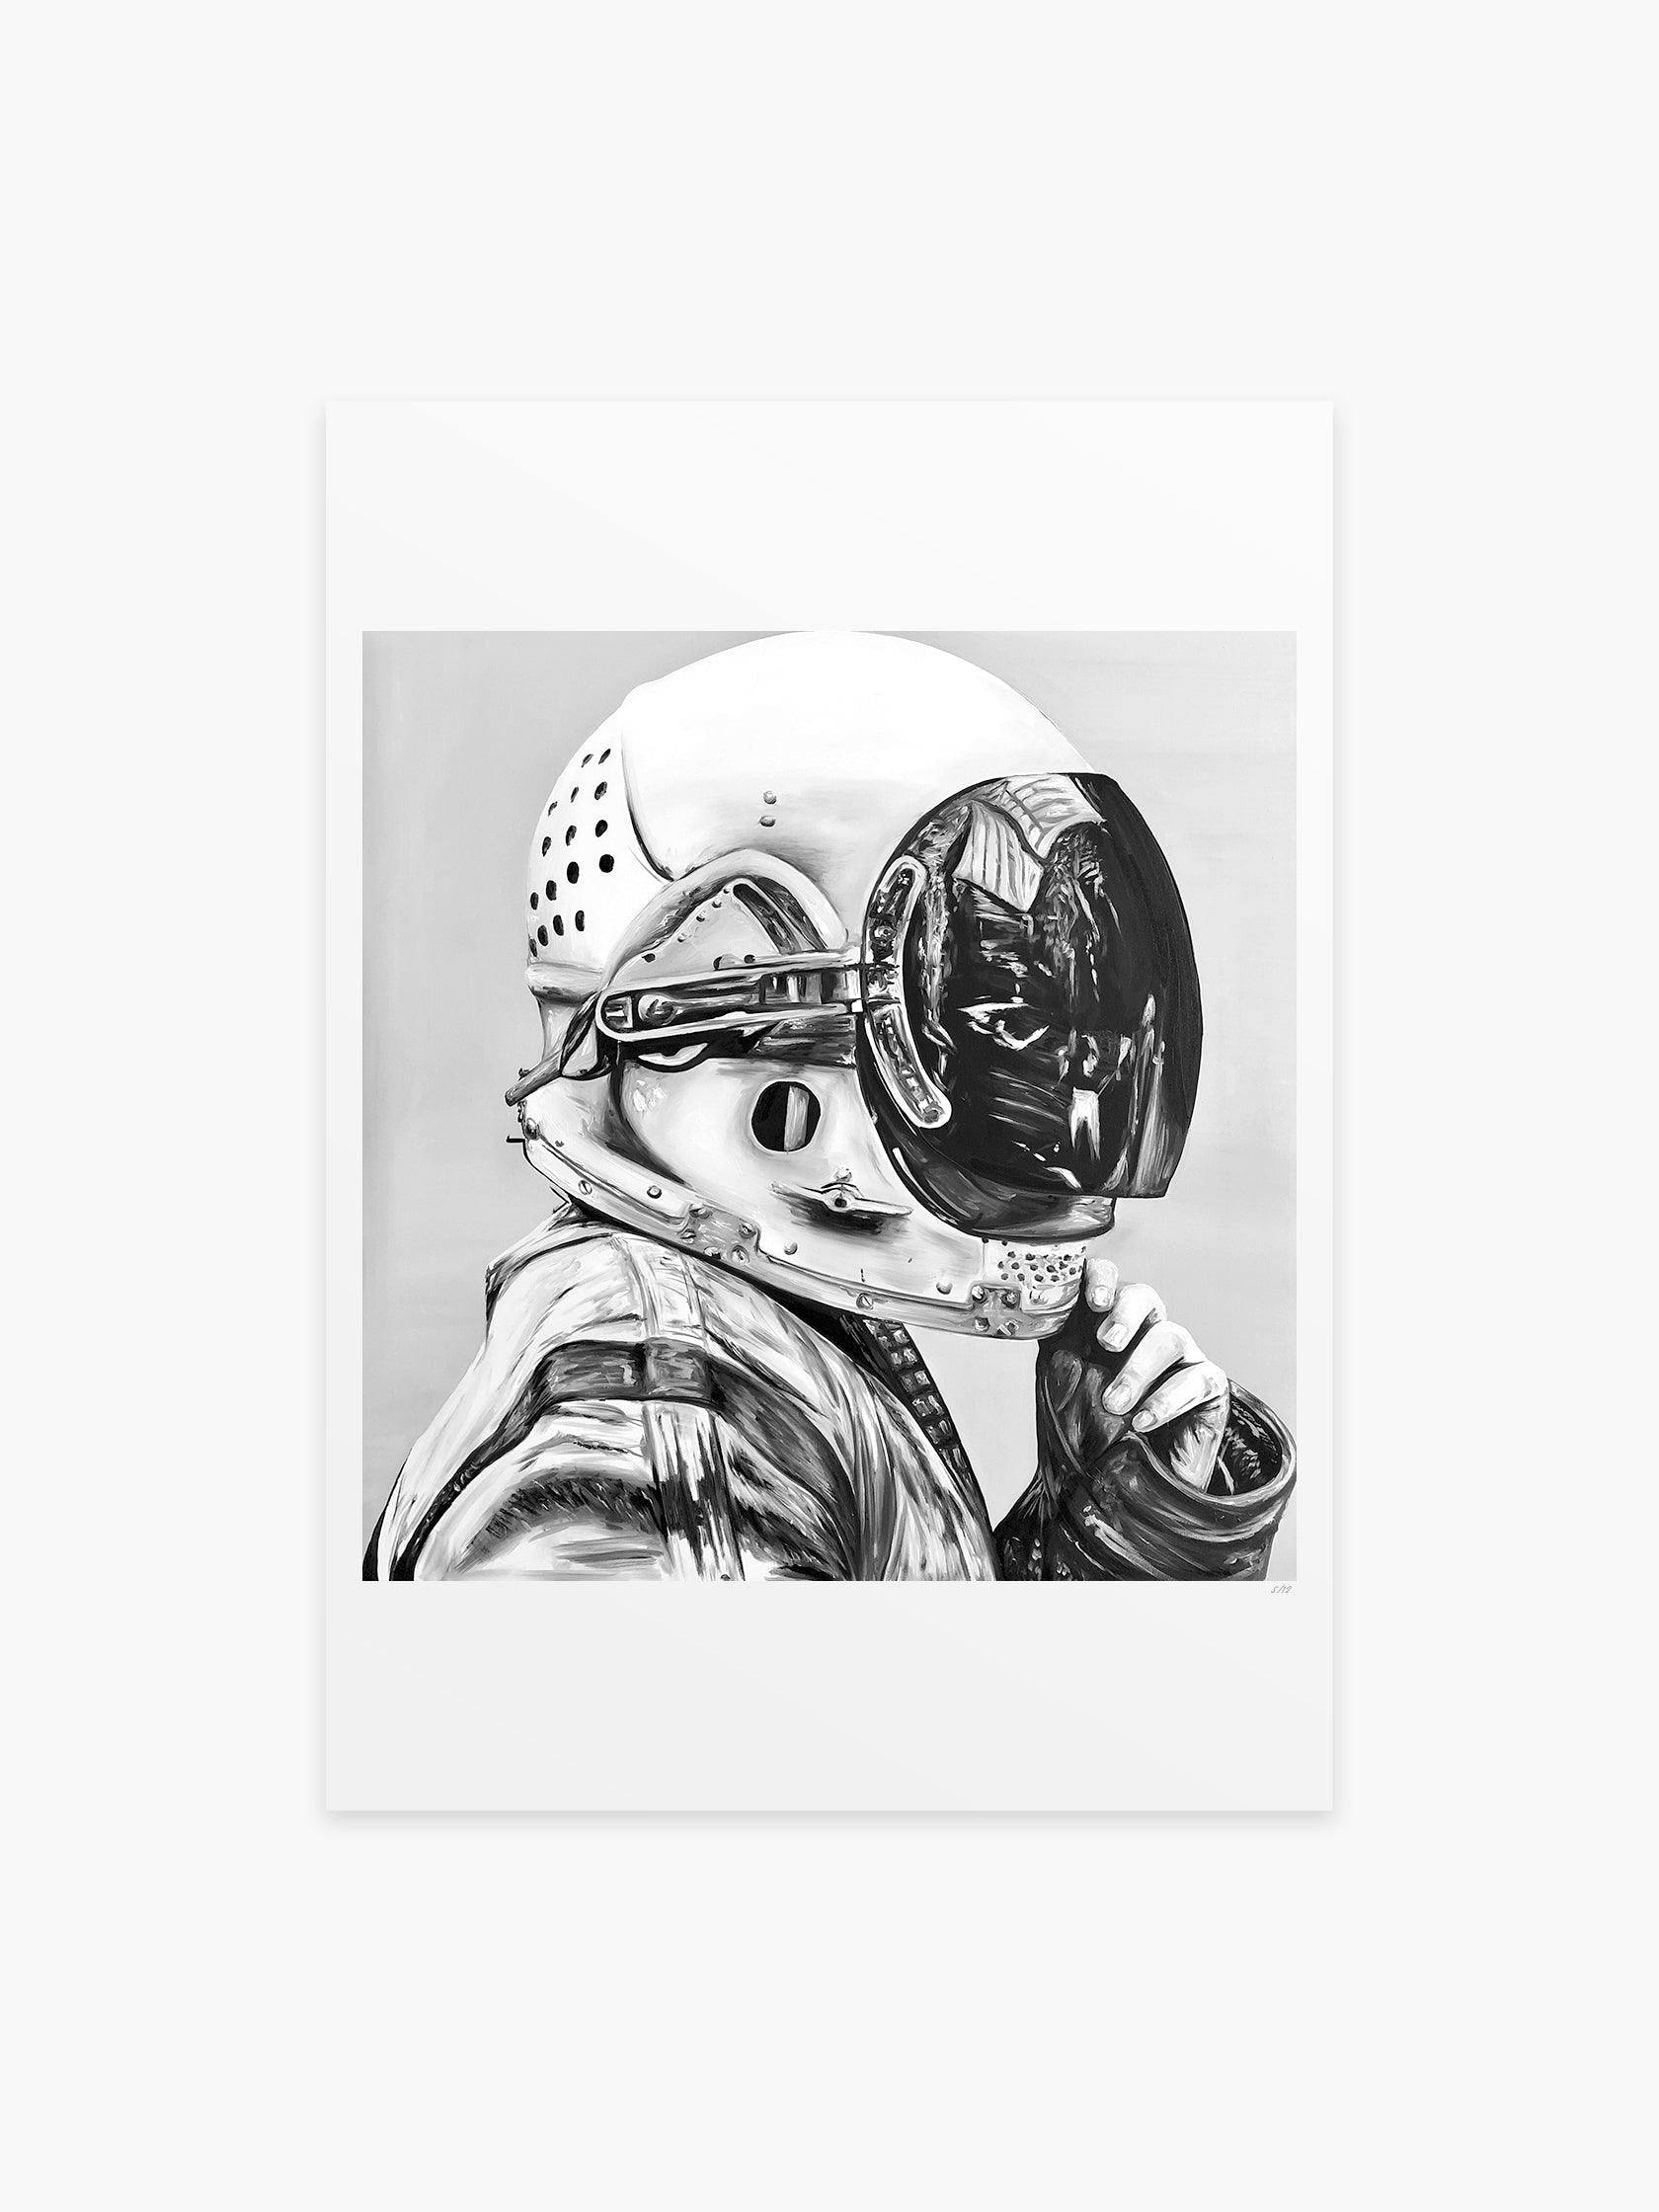 Cosmonaut White by Ricardo Rodriguez - Mankovsky Gallery